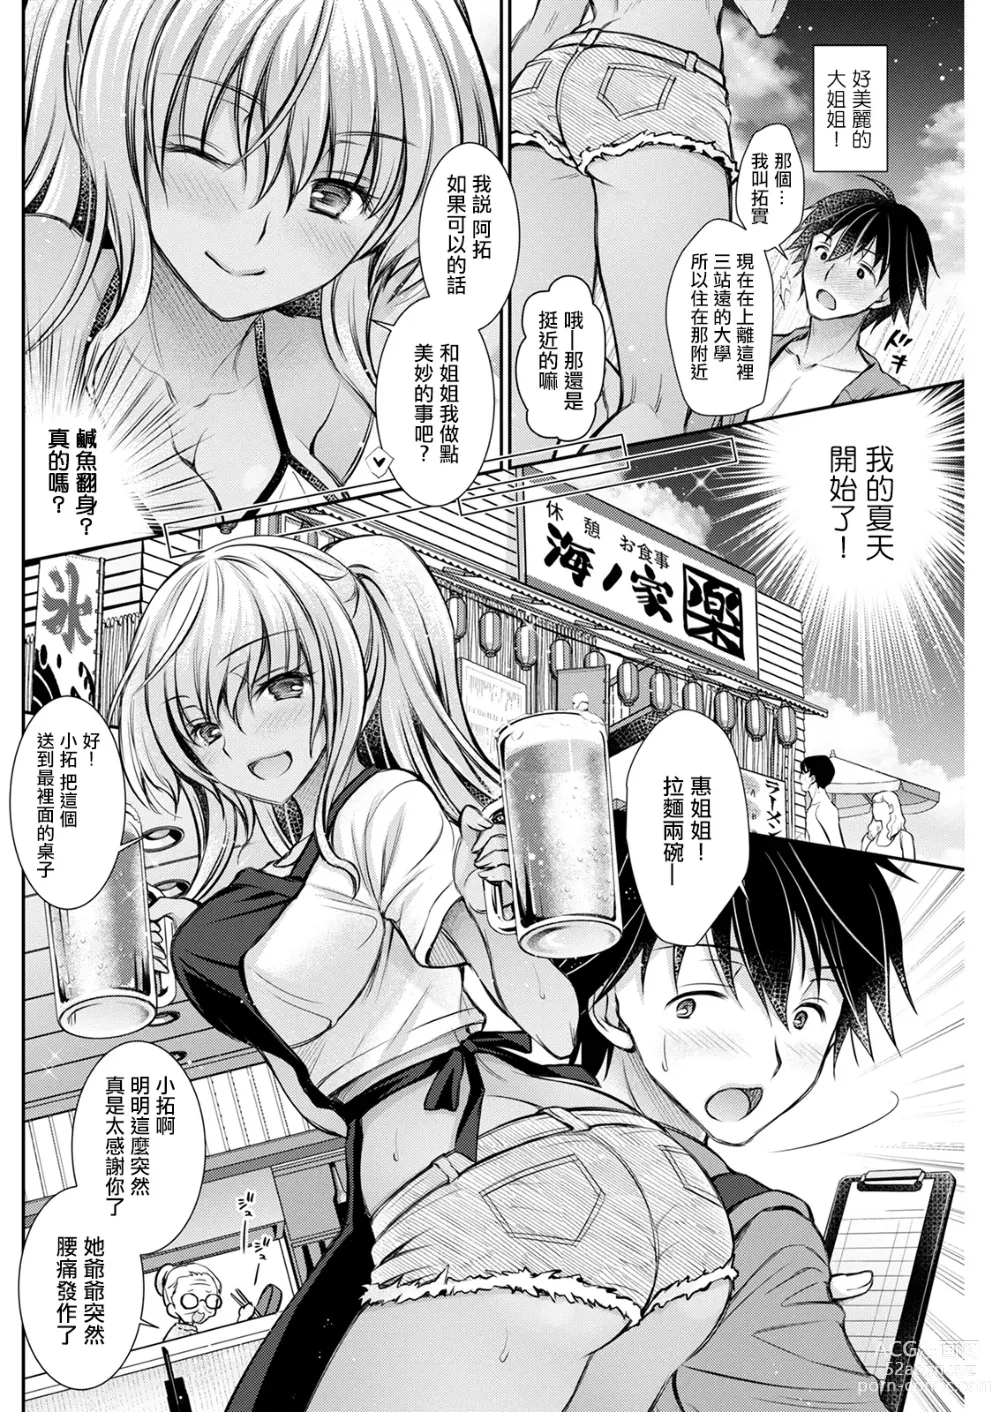 Page 2 of manga Umi no Yeah!!